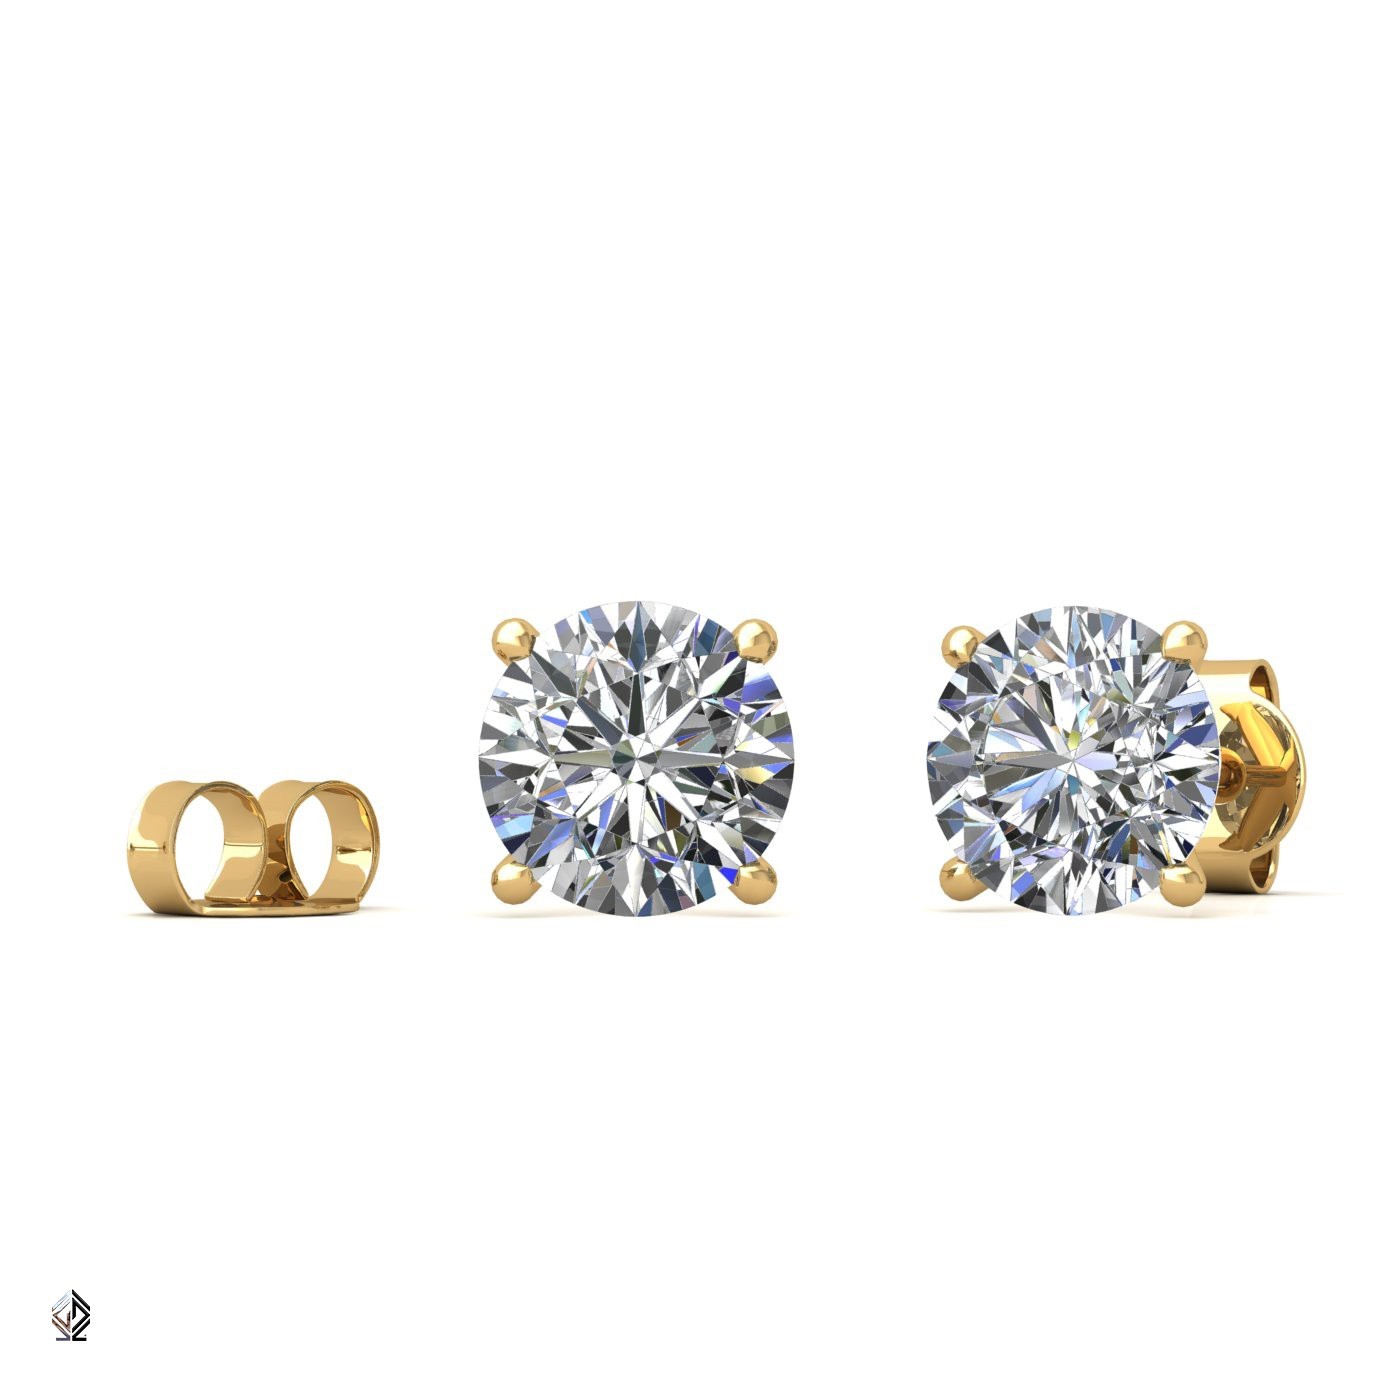 18k yellow gold 1.0 ct each (2,0 tcw) 4 prongs round cut classic diamond earring studs